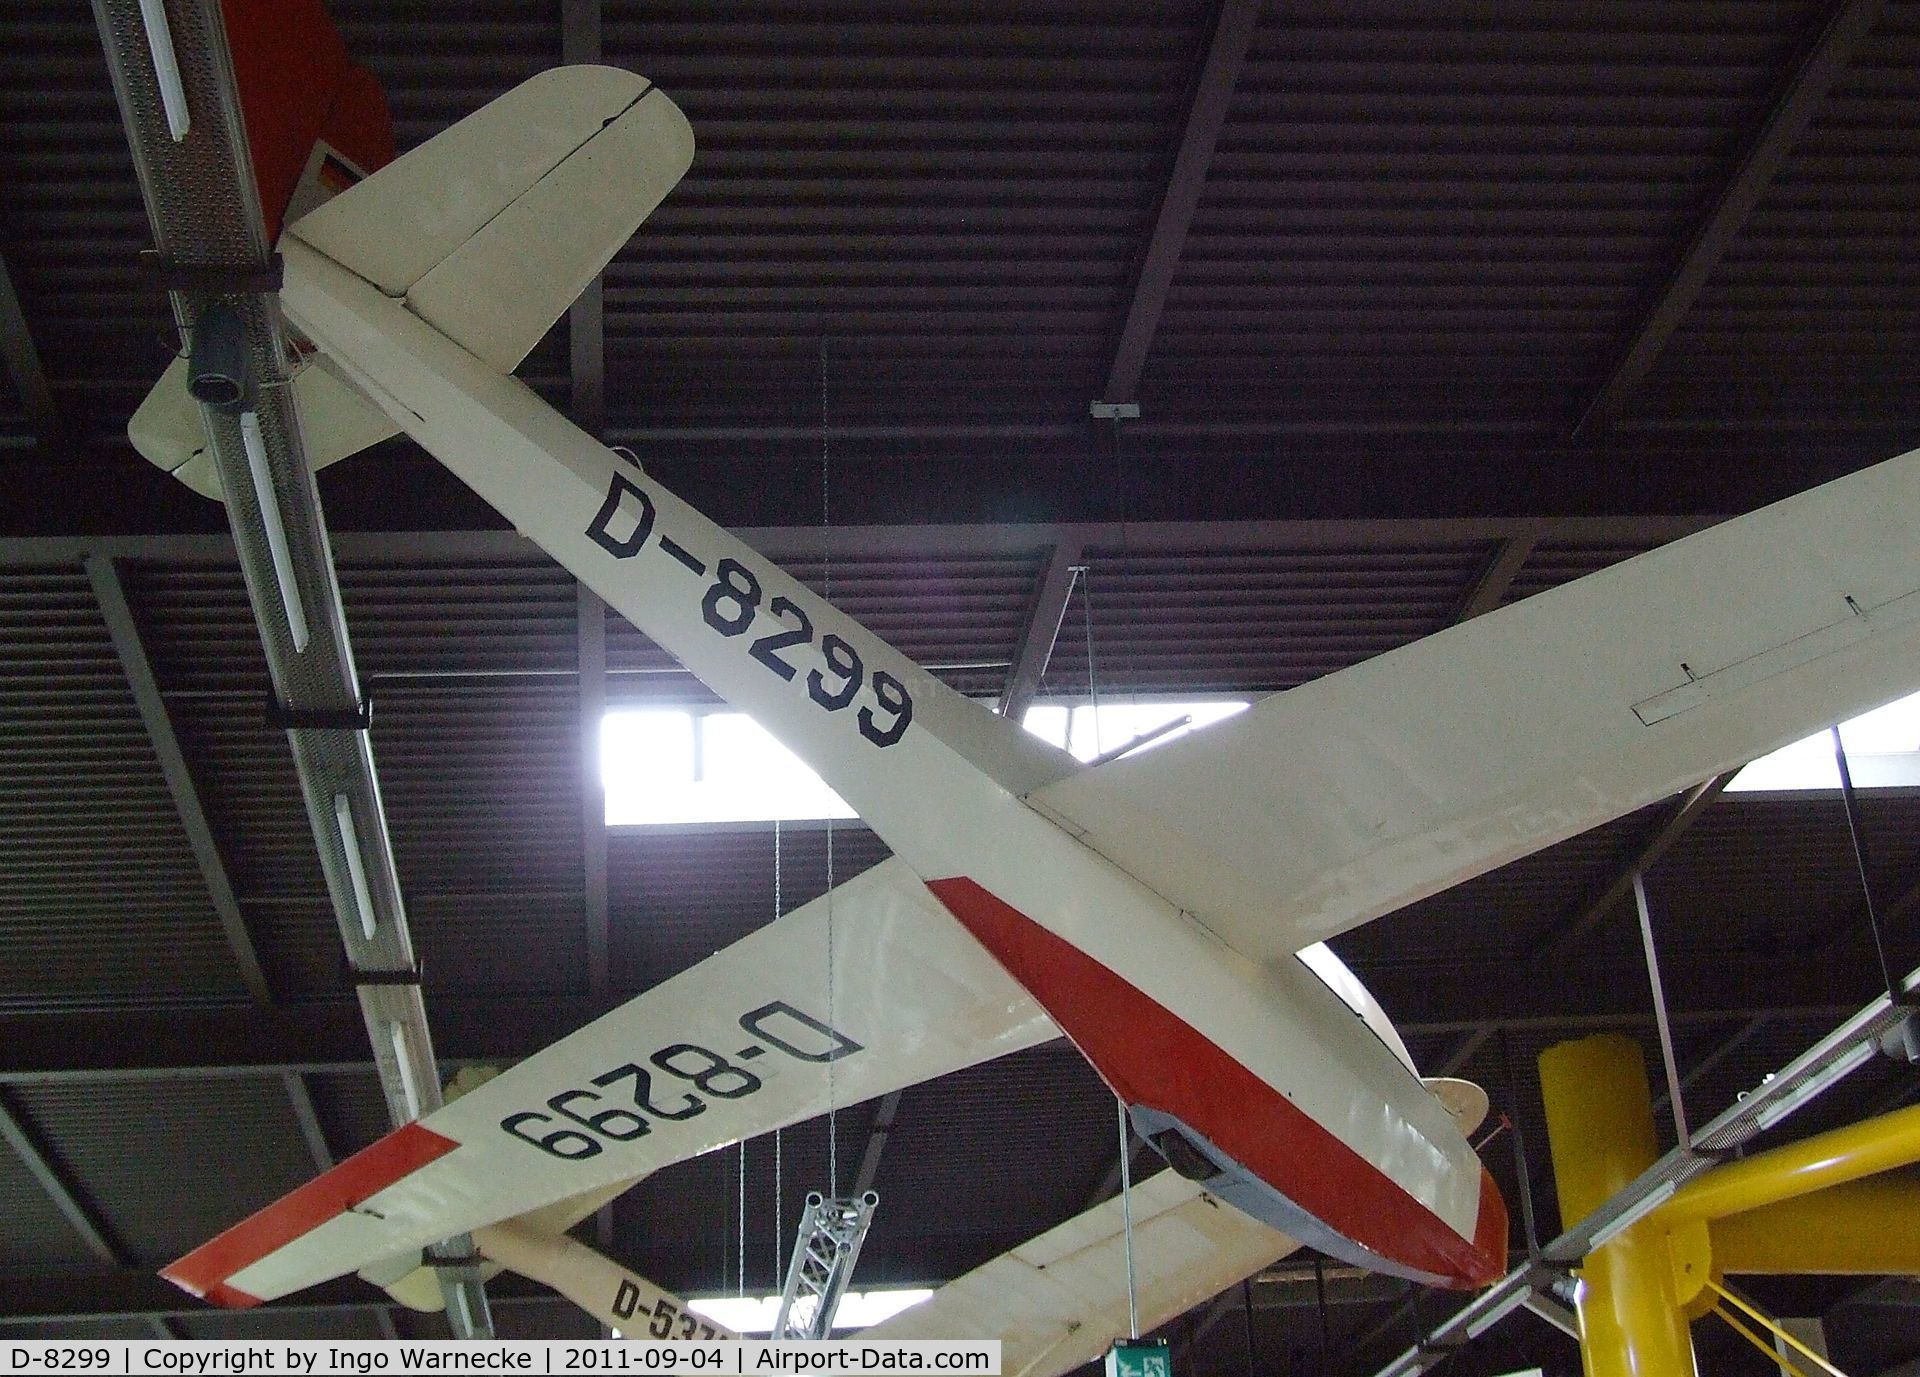 D-8299, Scheibe Mu-13E Bergfalke II C/N Not found D-8299, Scheibe Bergfalke II/55 at the Auto & Technik Museum, Sinsheim